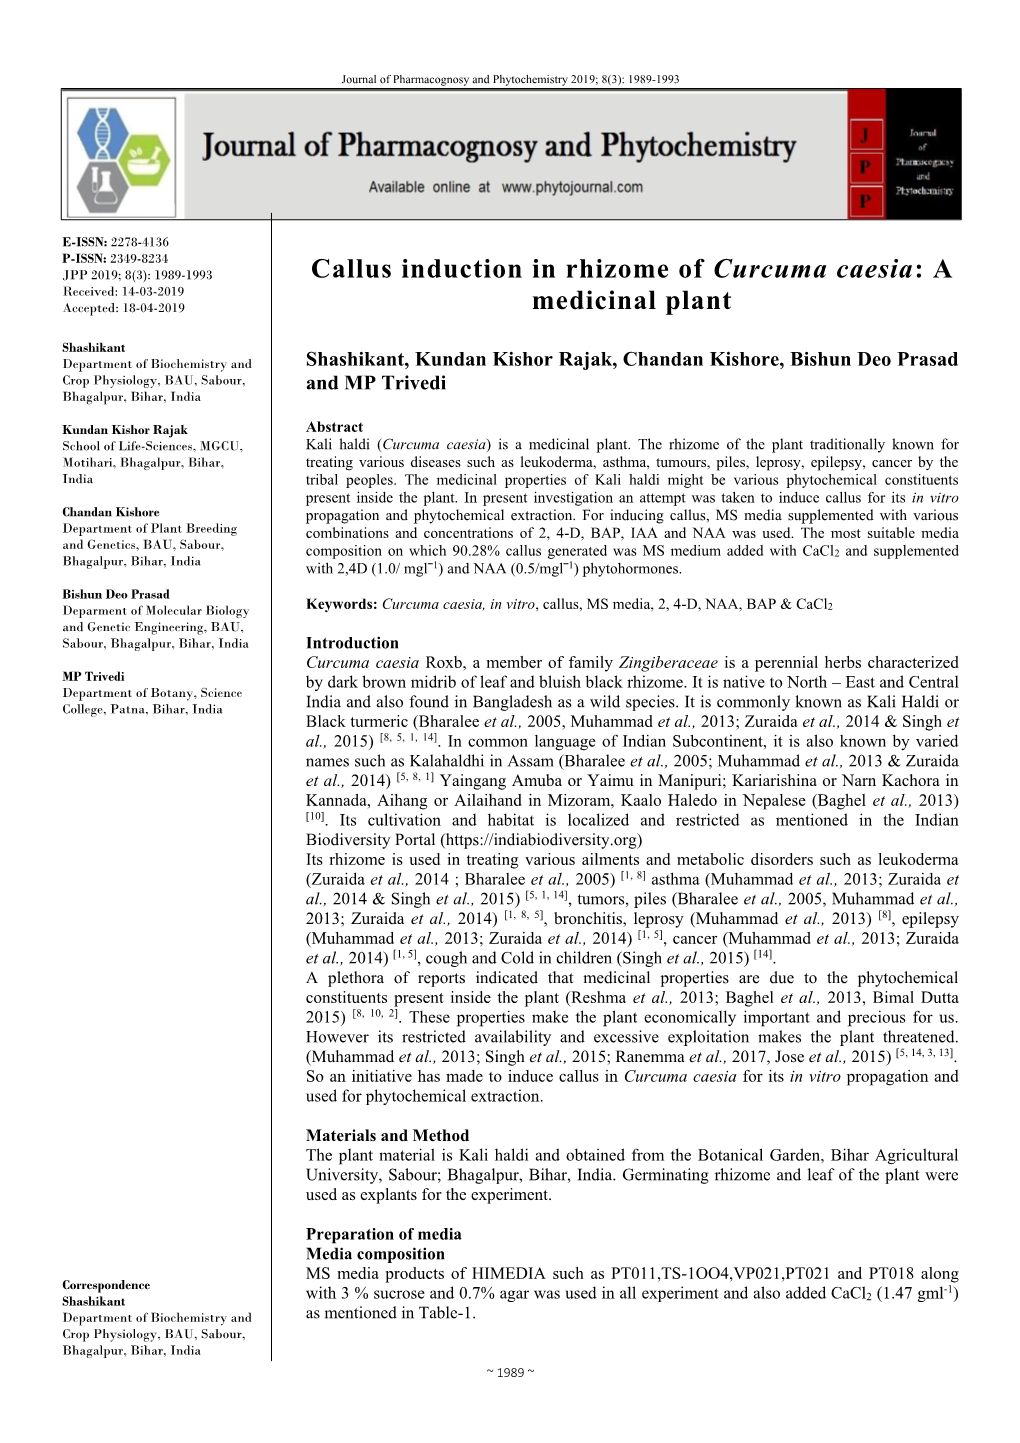 Callus Induction in Rhizome of Curcuma Caesia: a Medicinal Plant